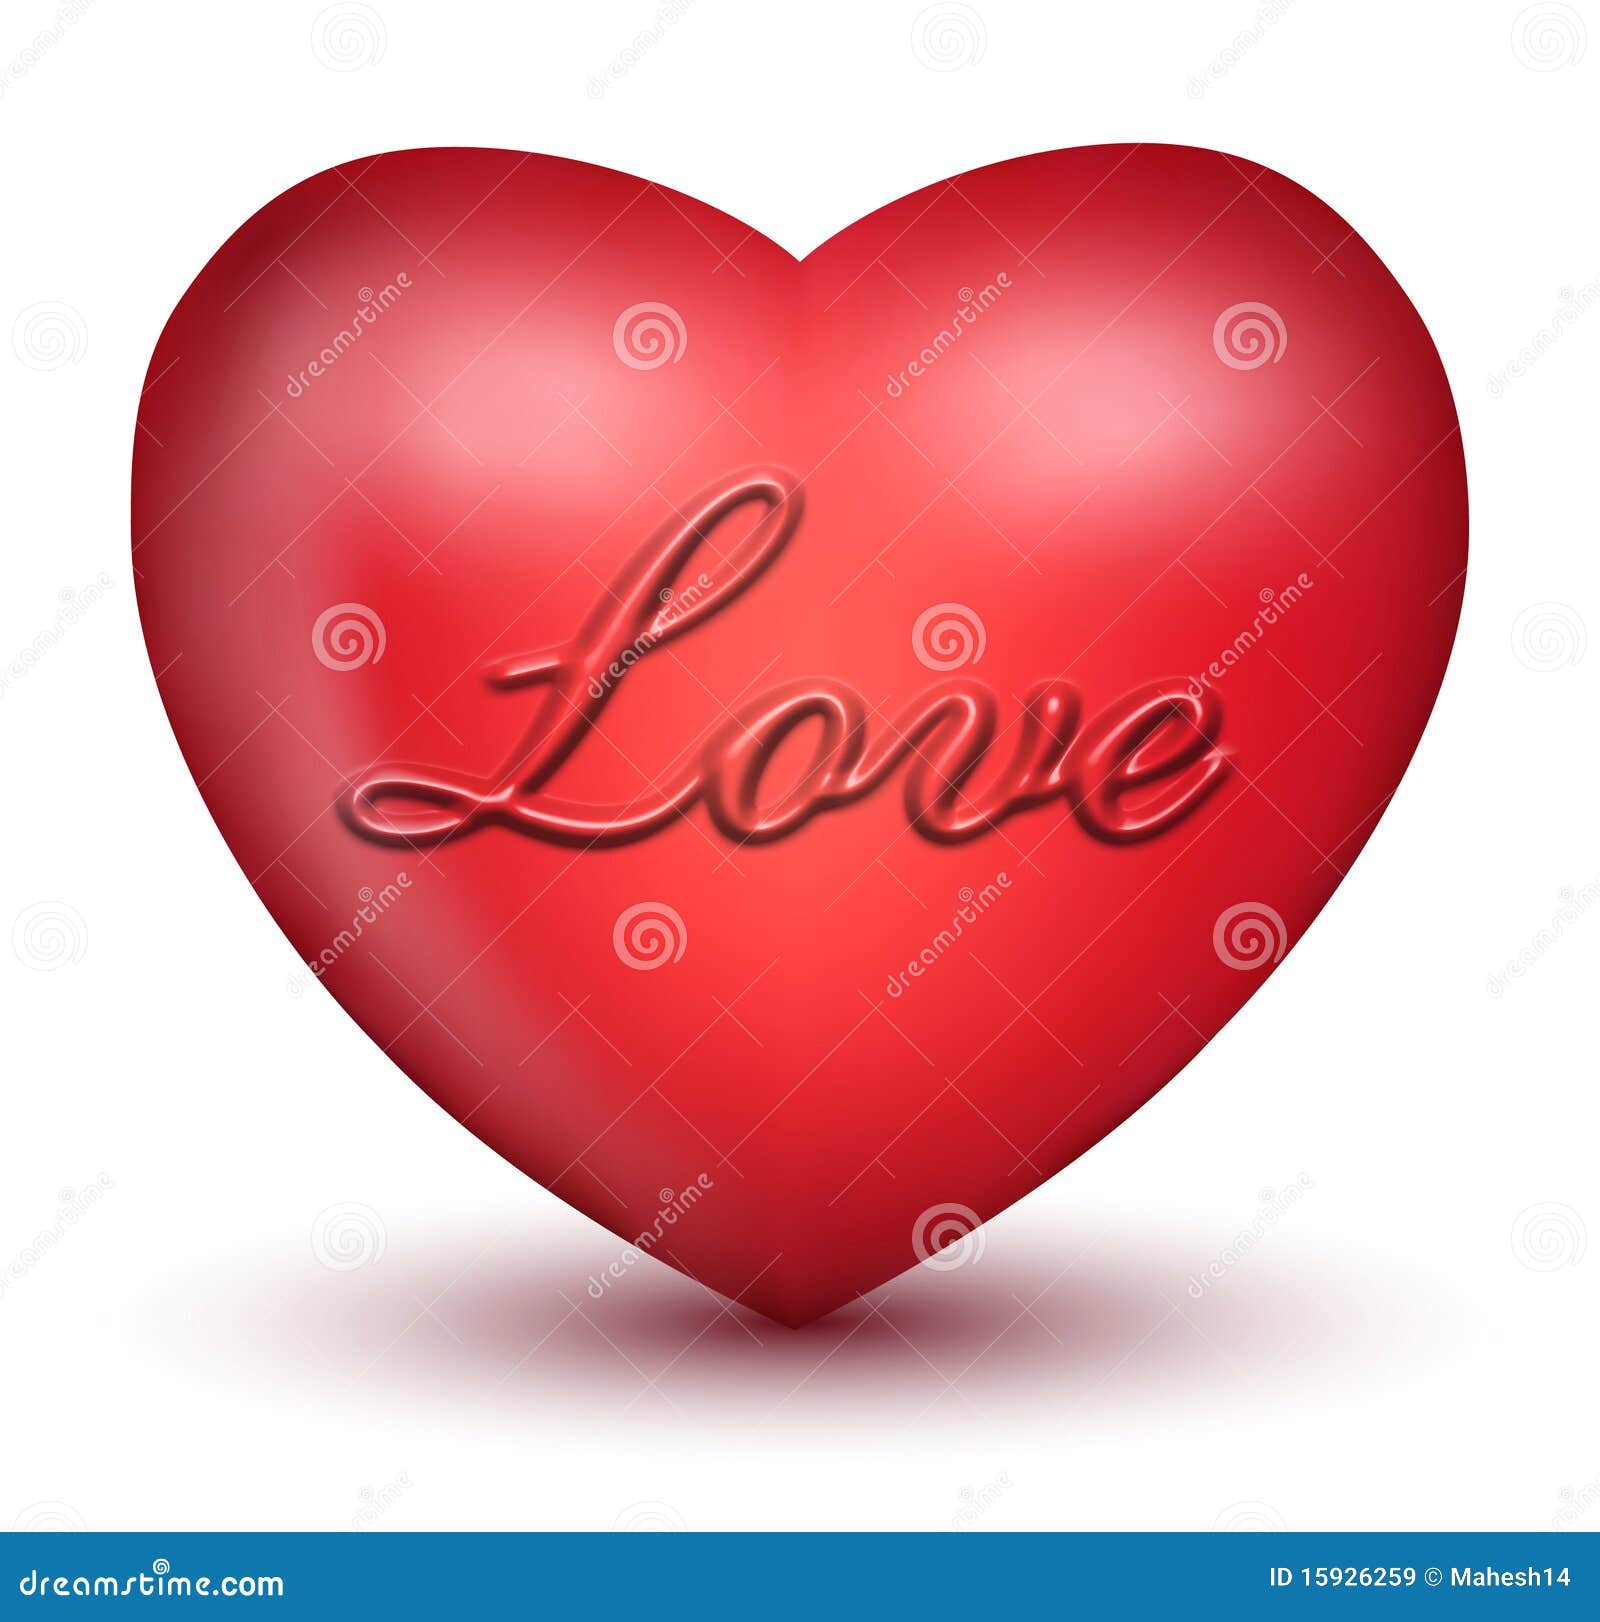 free 3d love heart downloads